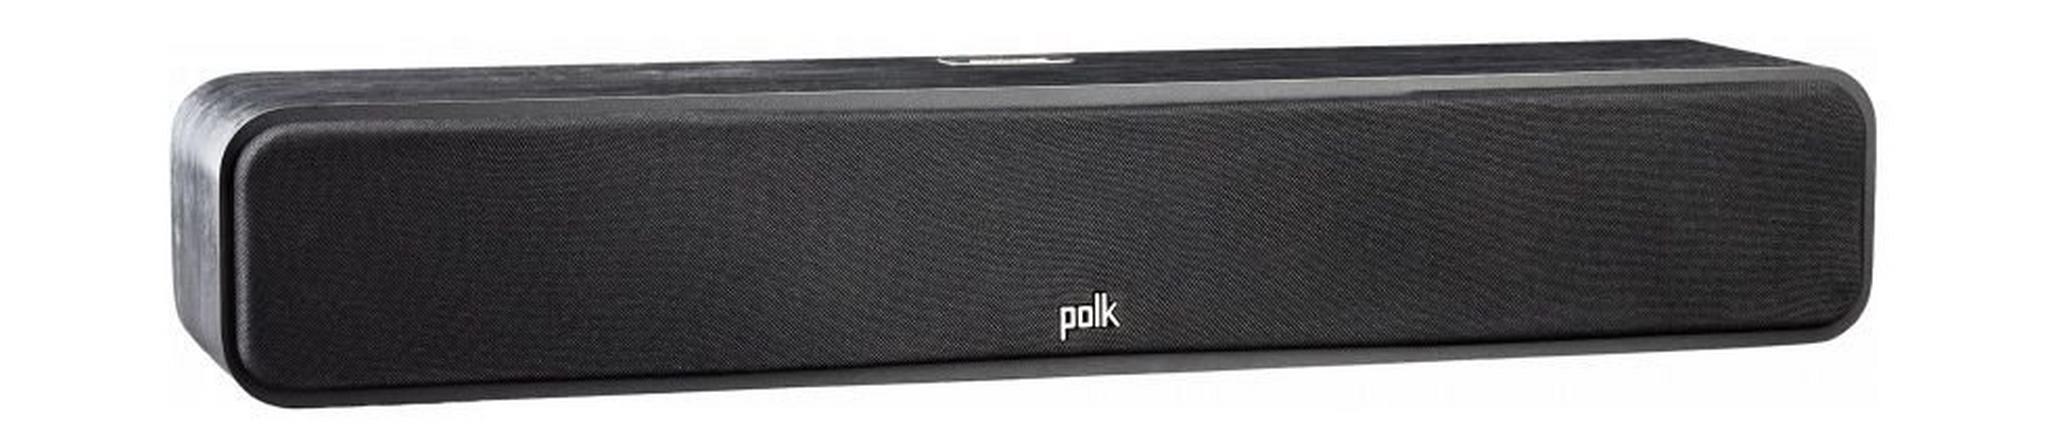 Polk Audio S35 150W 4-inch Center Speaker - Black